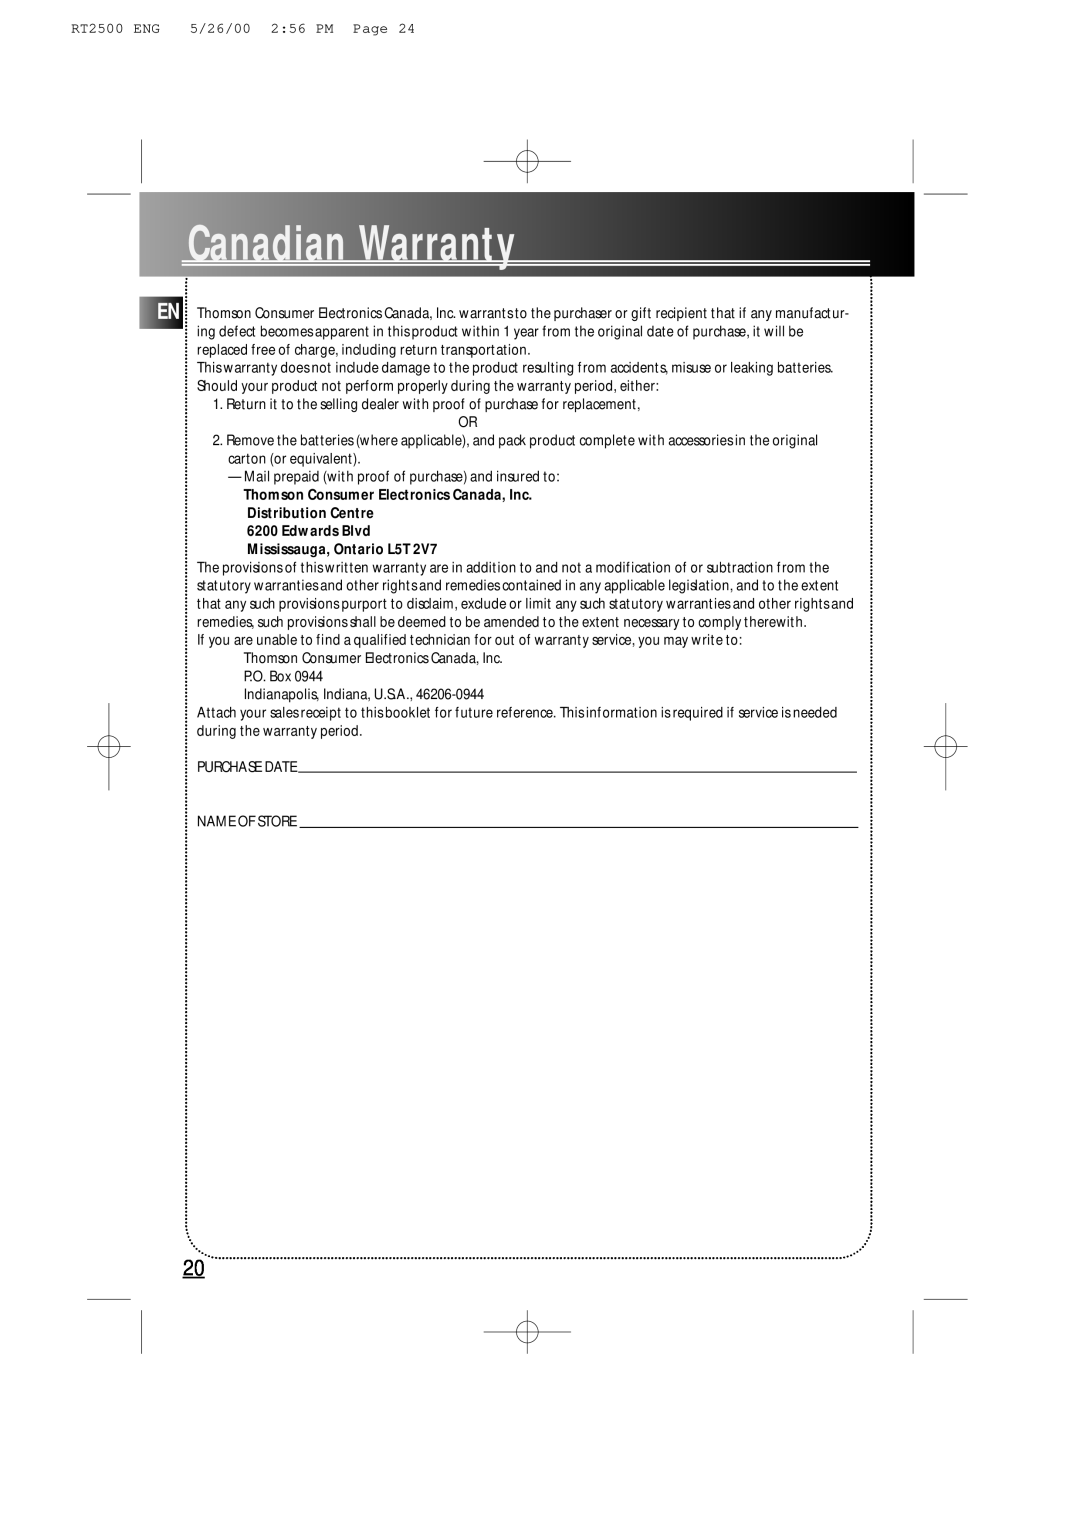 RCA RT2500R user manual CanadianWarranty 